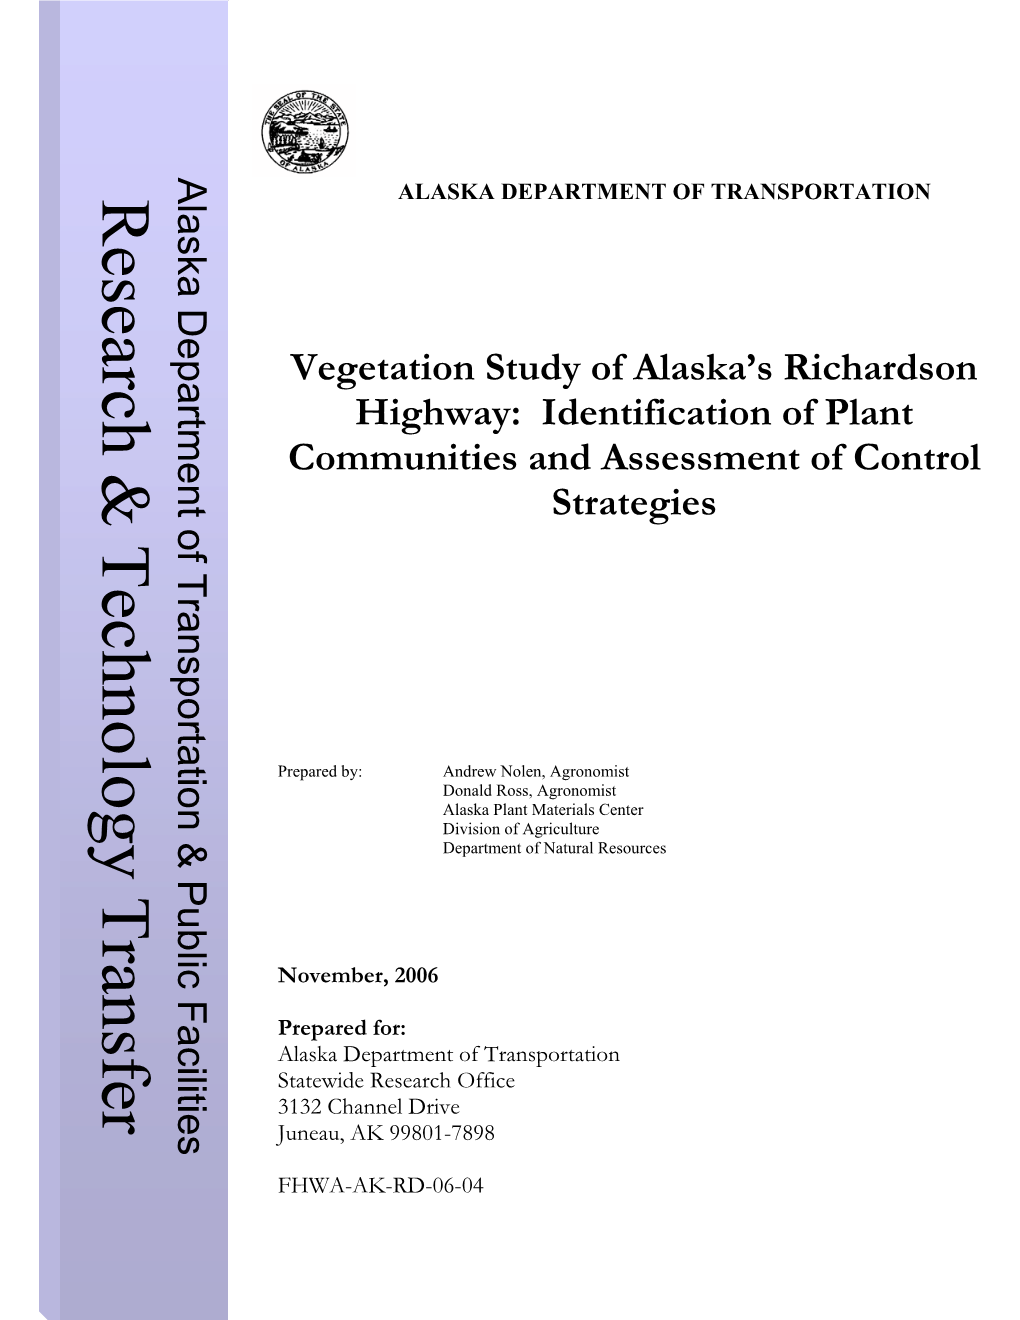 Vegetation Study of Alaska's Richardson Highway: Identification